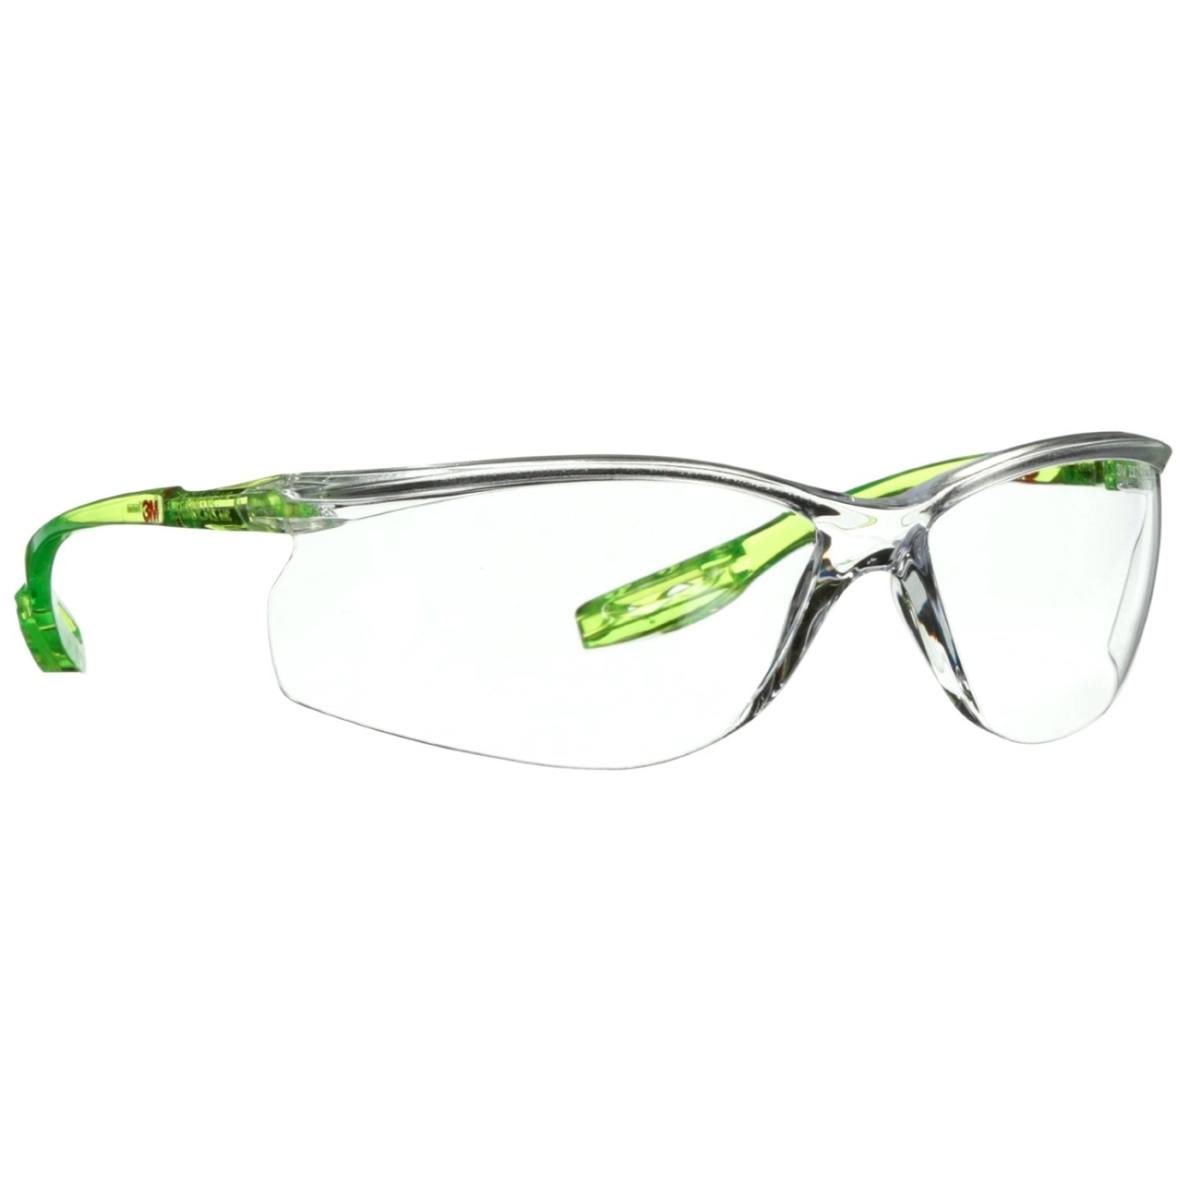 3M Solus veiligheidsbril serie CCS, lime groene veren, Scotchgard anticondens coating (K &amp; N), heldere glazen, SCCS01SGAF-GRN-E